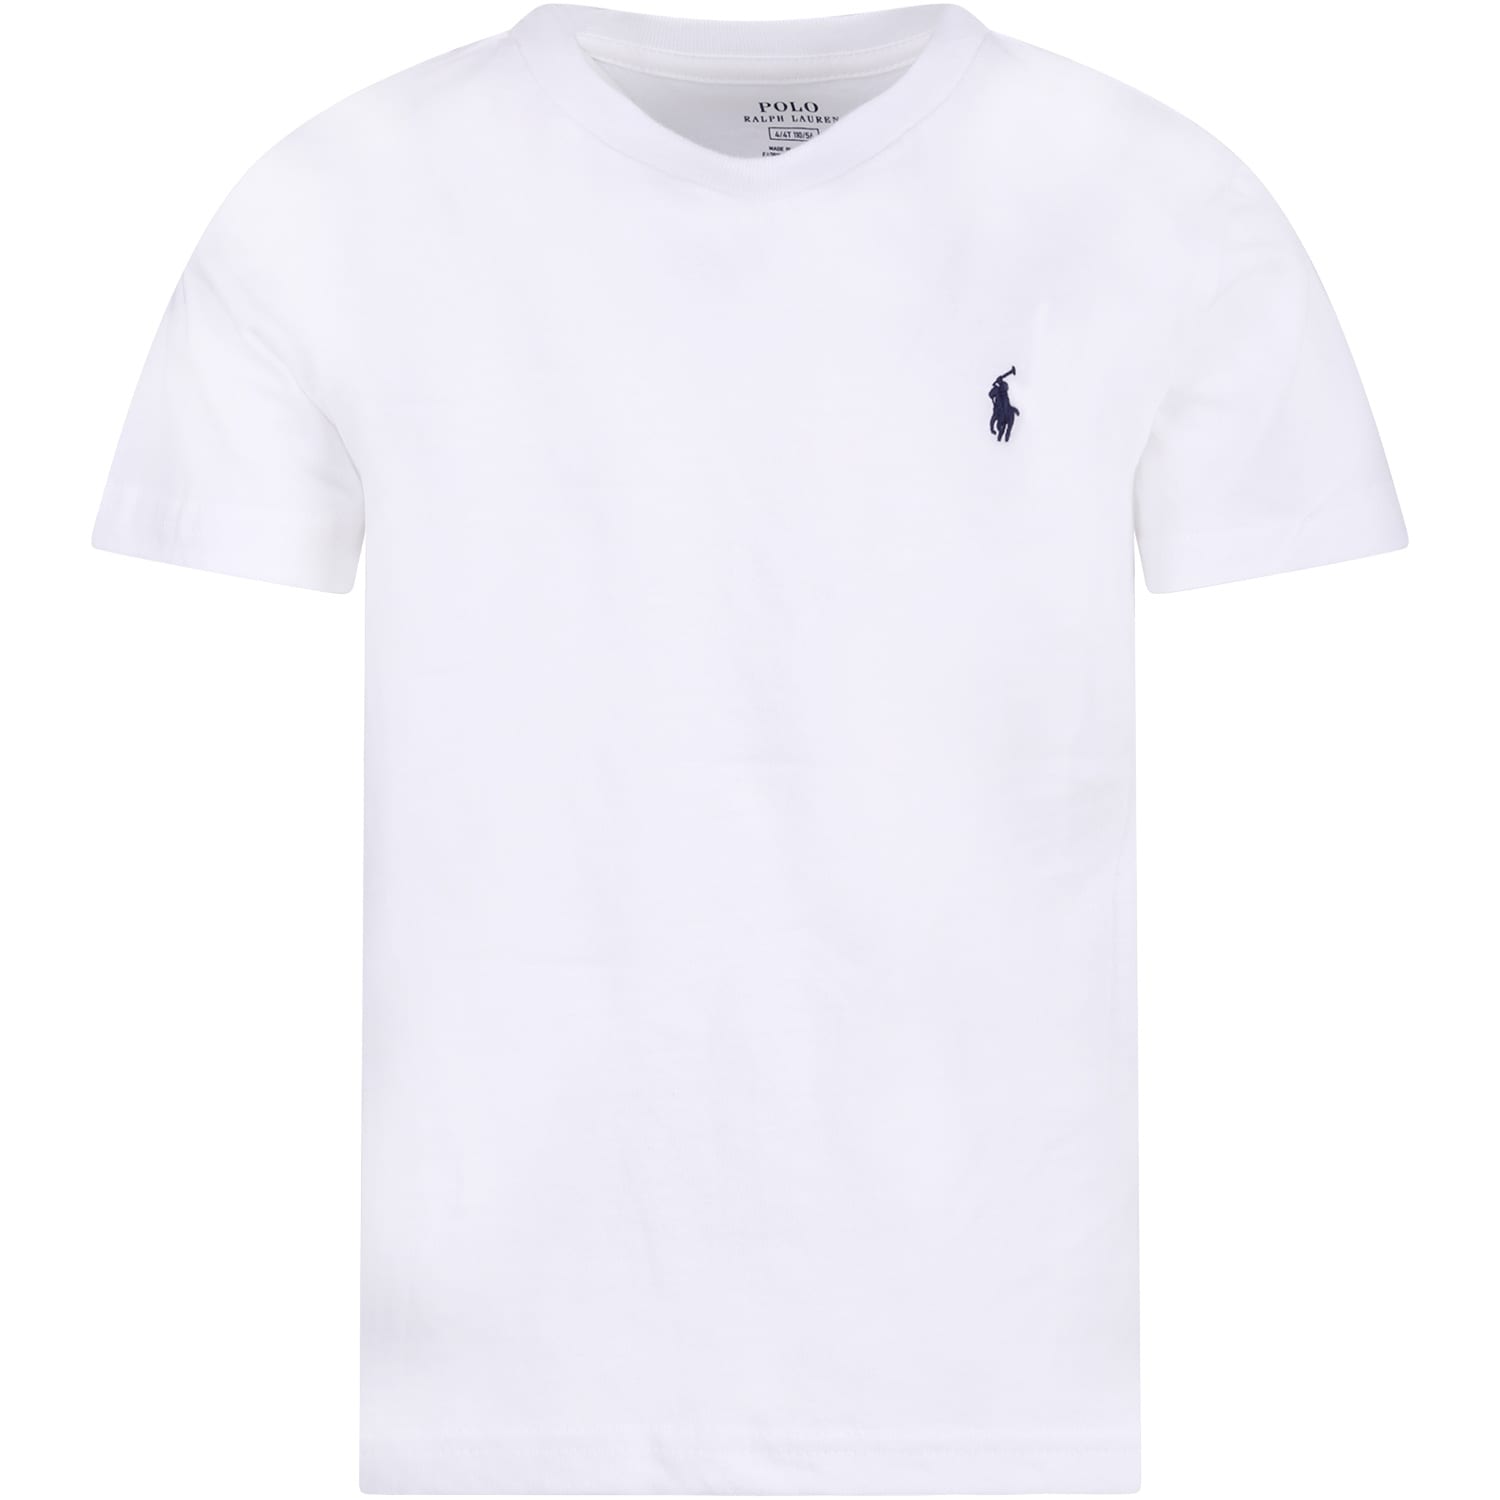 Ralph Lauren White T-shirt With Blue Pony Logo For Boy